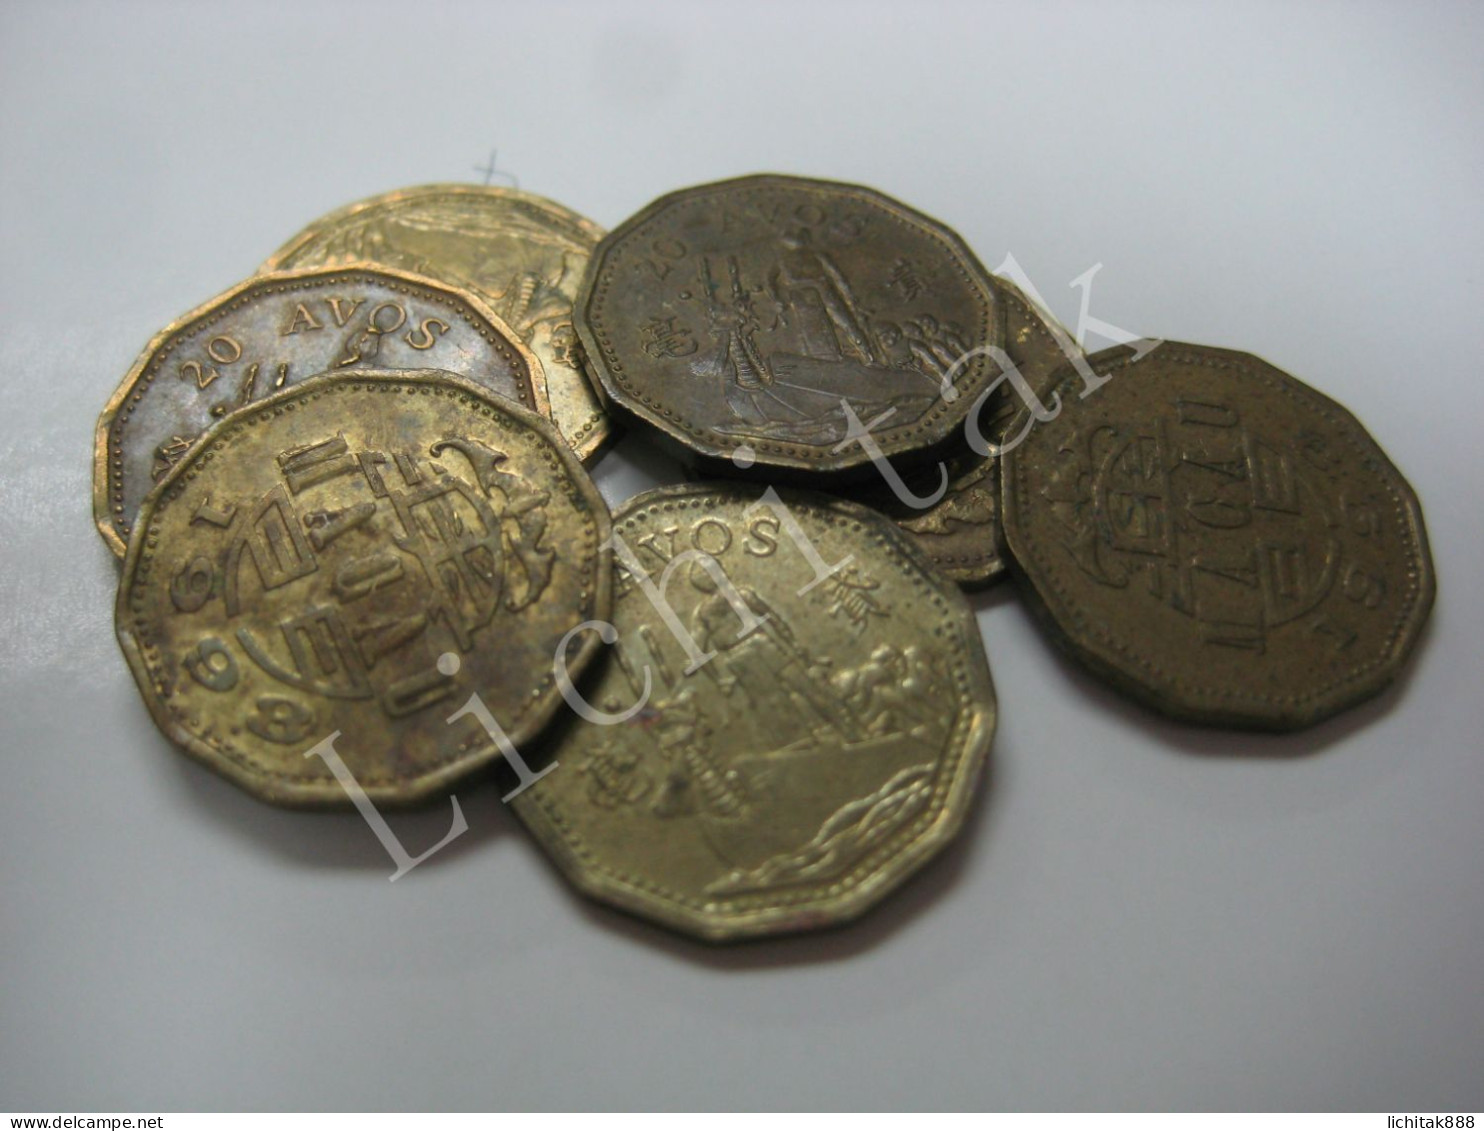 Currency MACAO Macau 1993 / 1998 $0.2  20 Avos Coins  Used - Macao